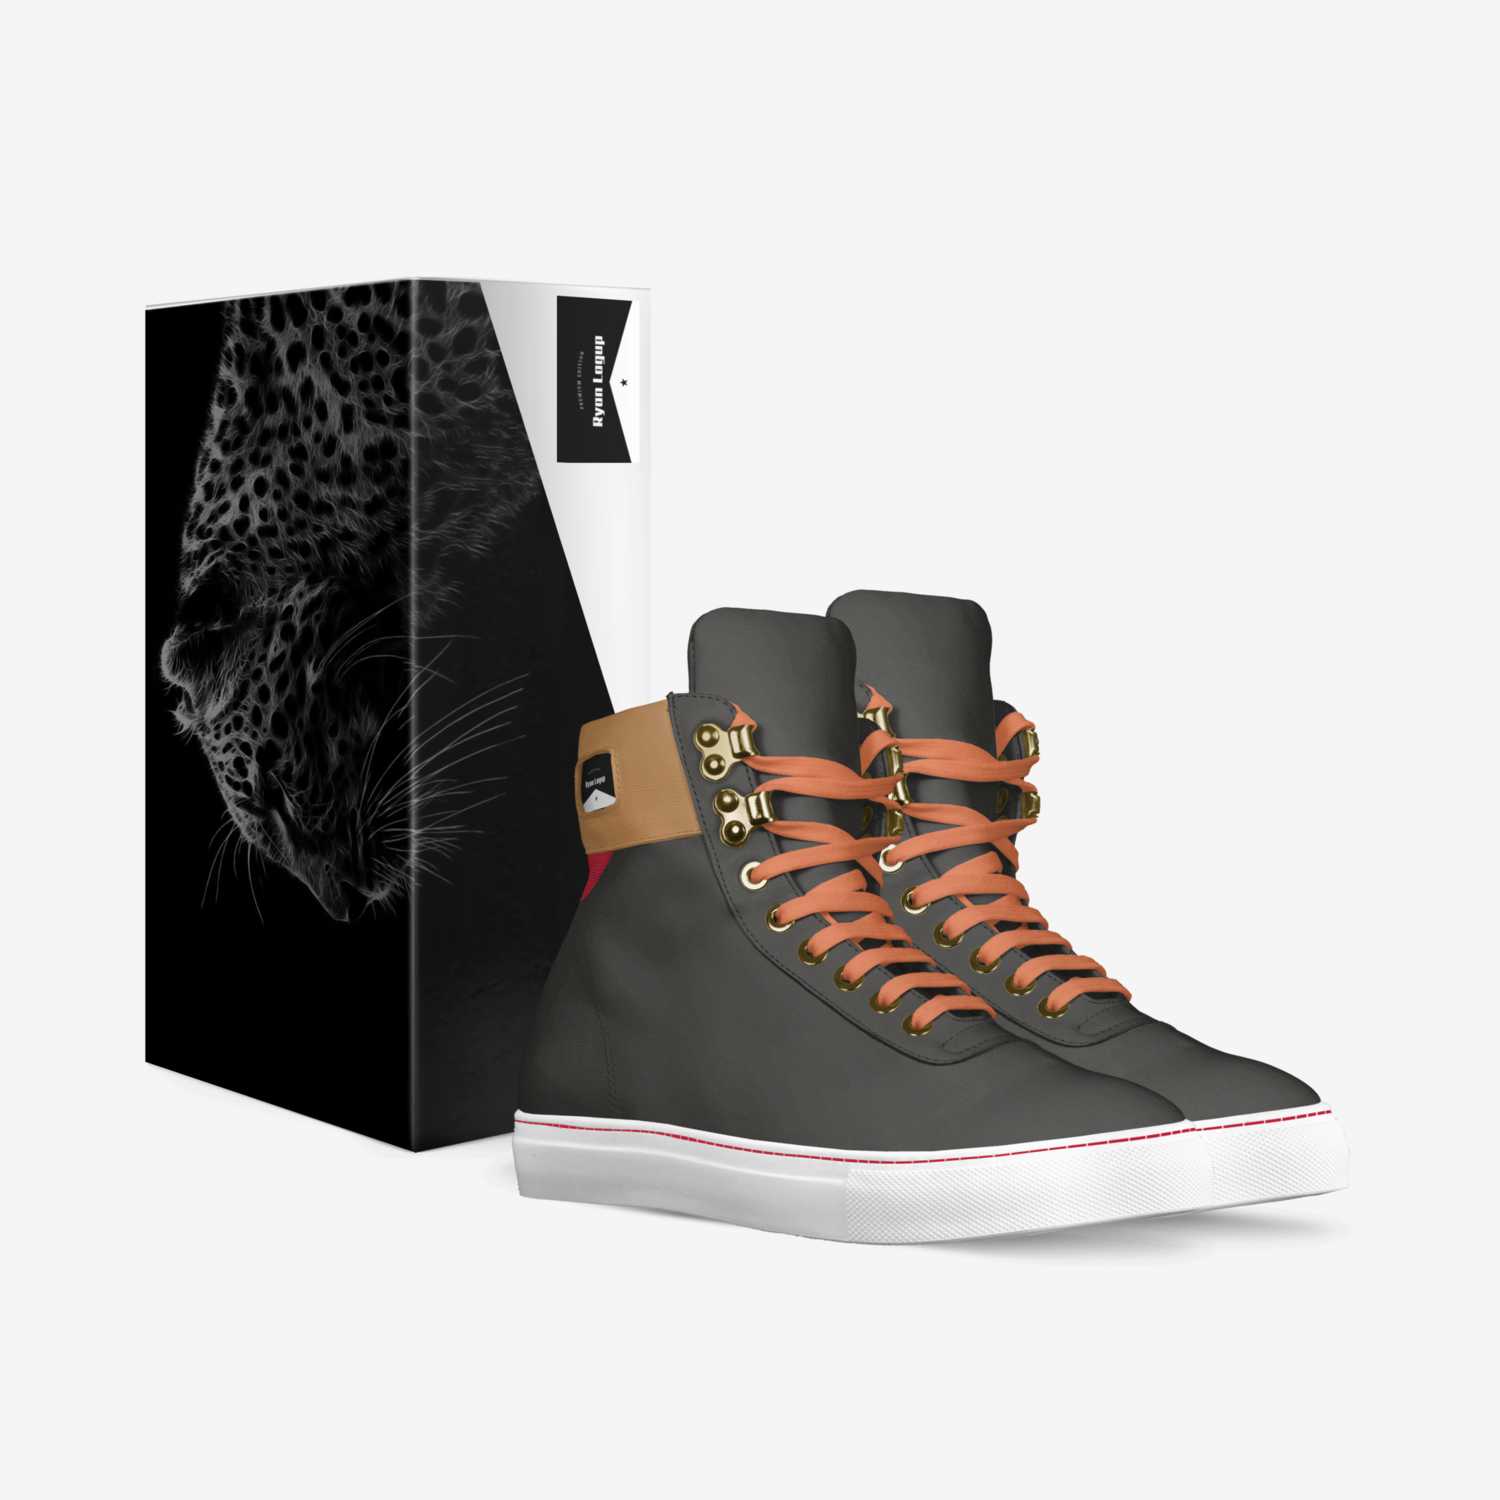 Ryan Lagup custom made in Italy shoes by Ryan Pugal | Box view